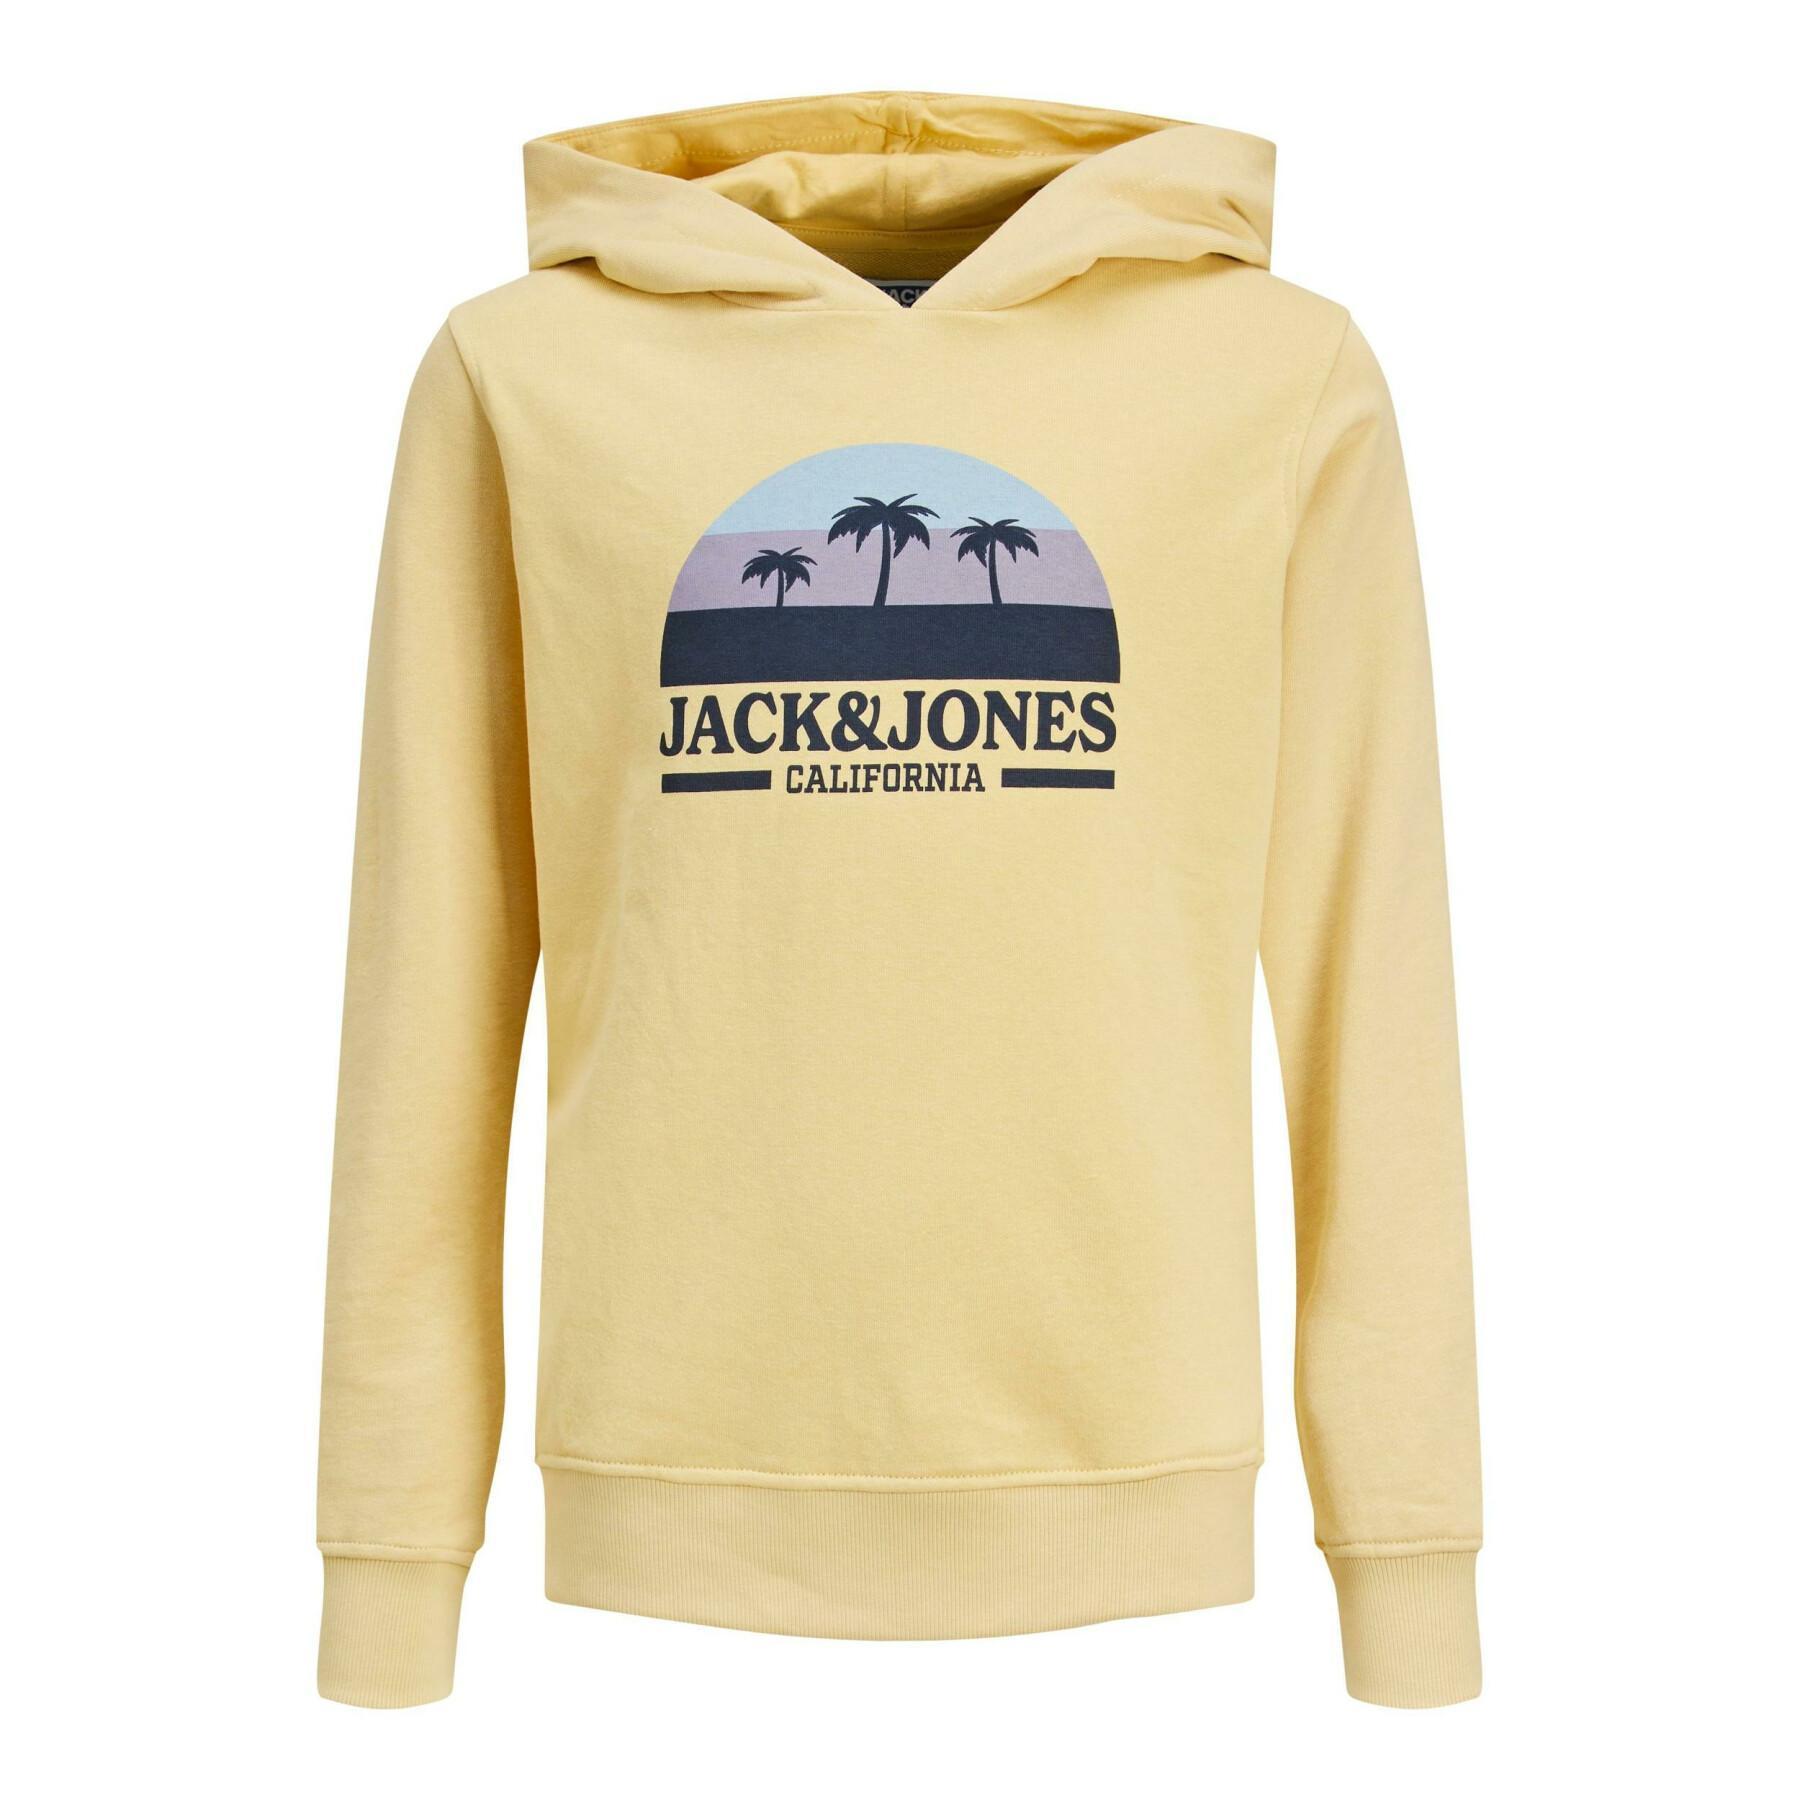 Kinder sweatshirt Jack & Jones Malibu Branding